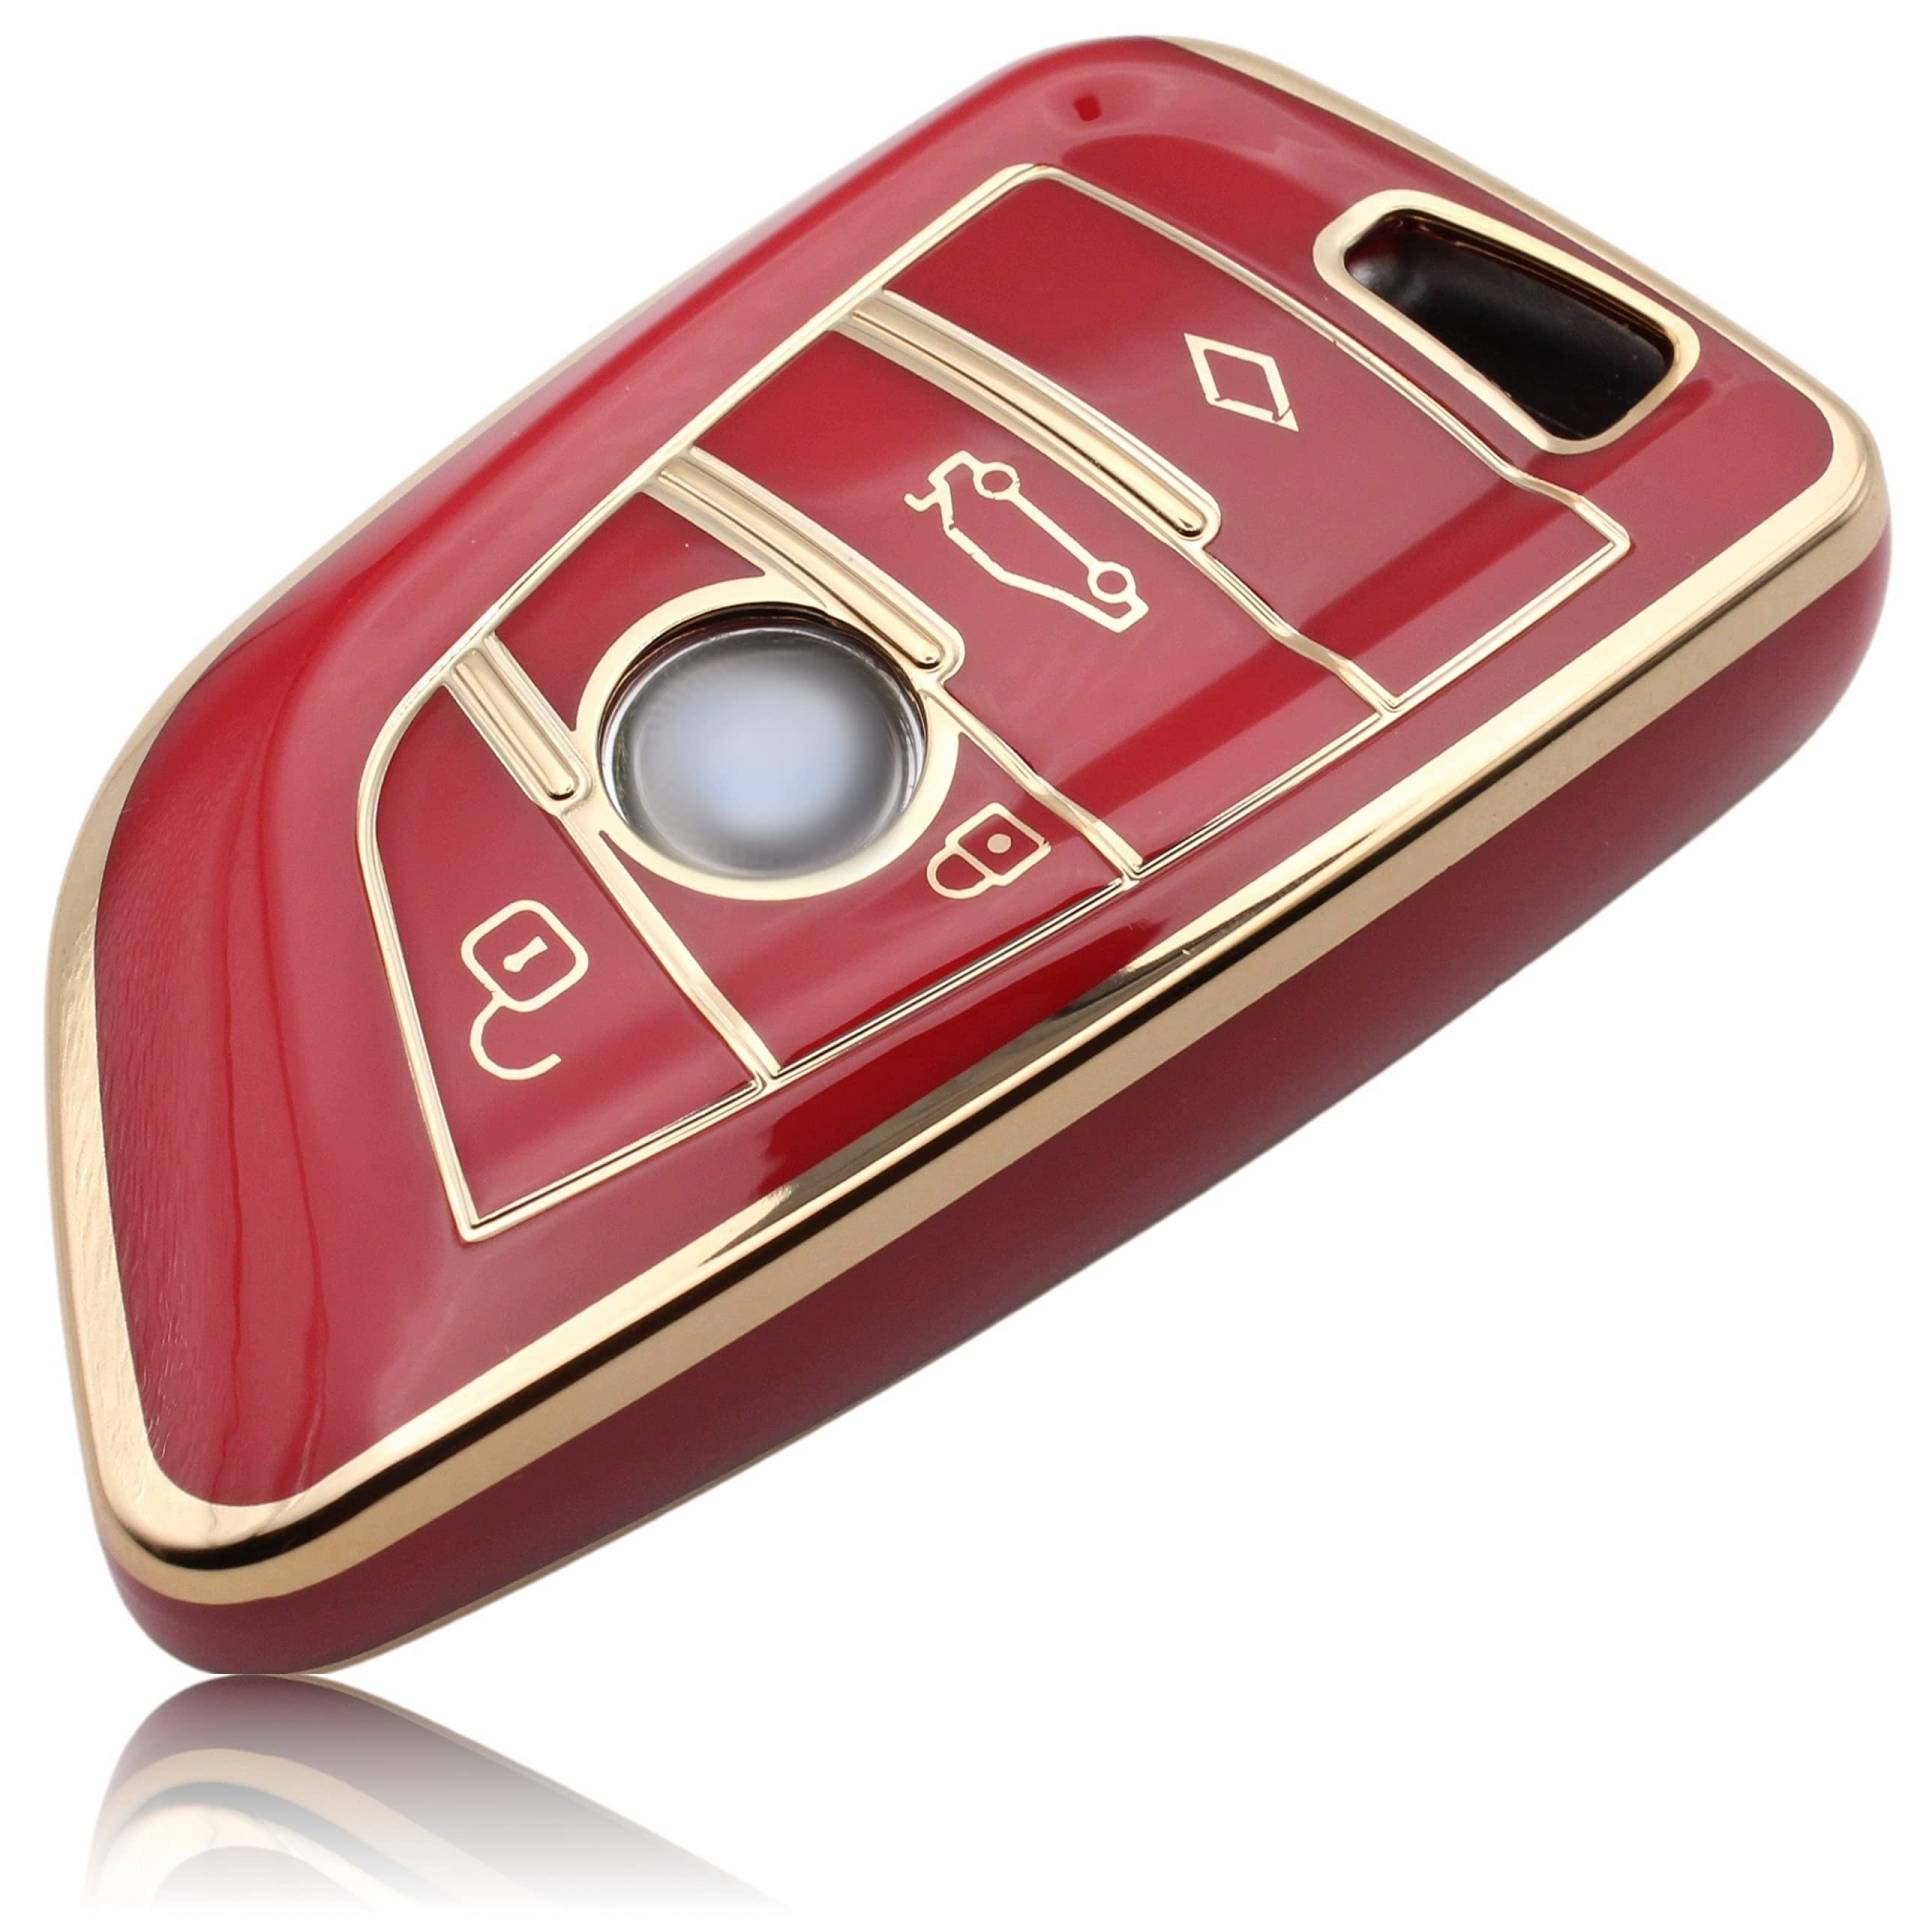 FOAMO Autoschlüssel Hülle kompatibel mit BMW 3-4-Tasten (nur Keyless-Go) - Silikon Schutzhülle Cover Schlüssel-Hülle in Rot von FOAMO